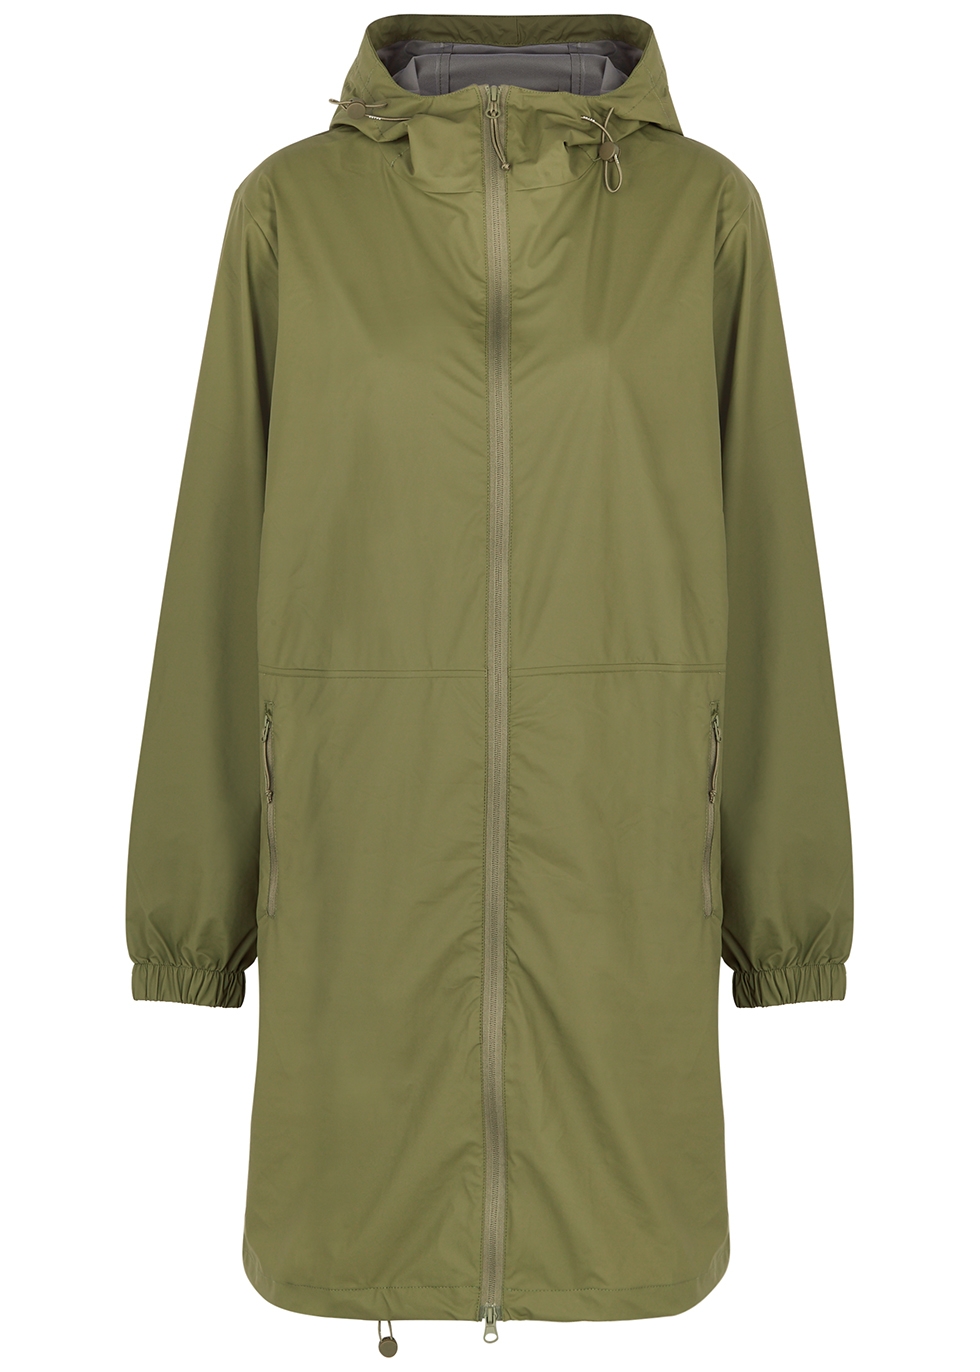 Ultralight army green rubberised raincoat